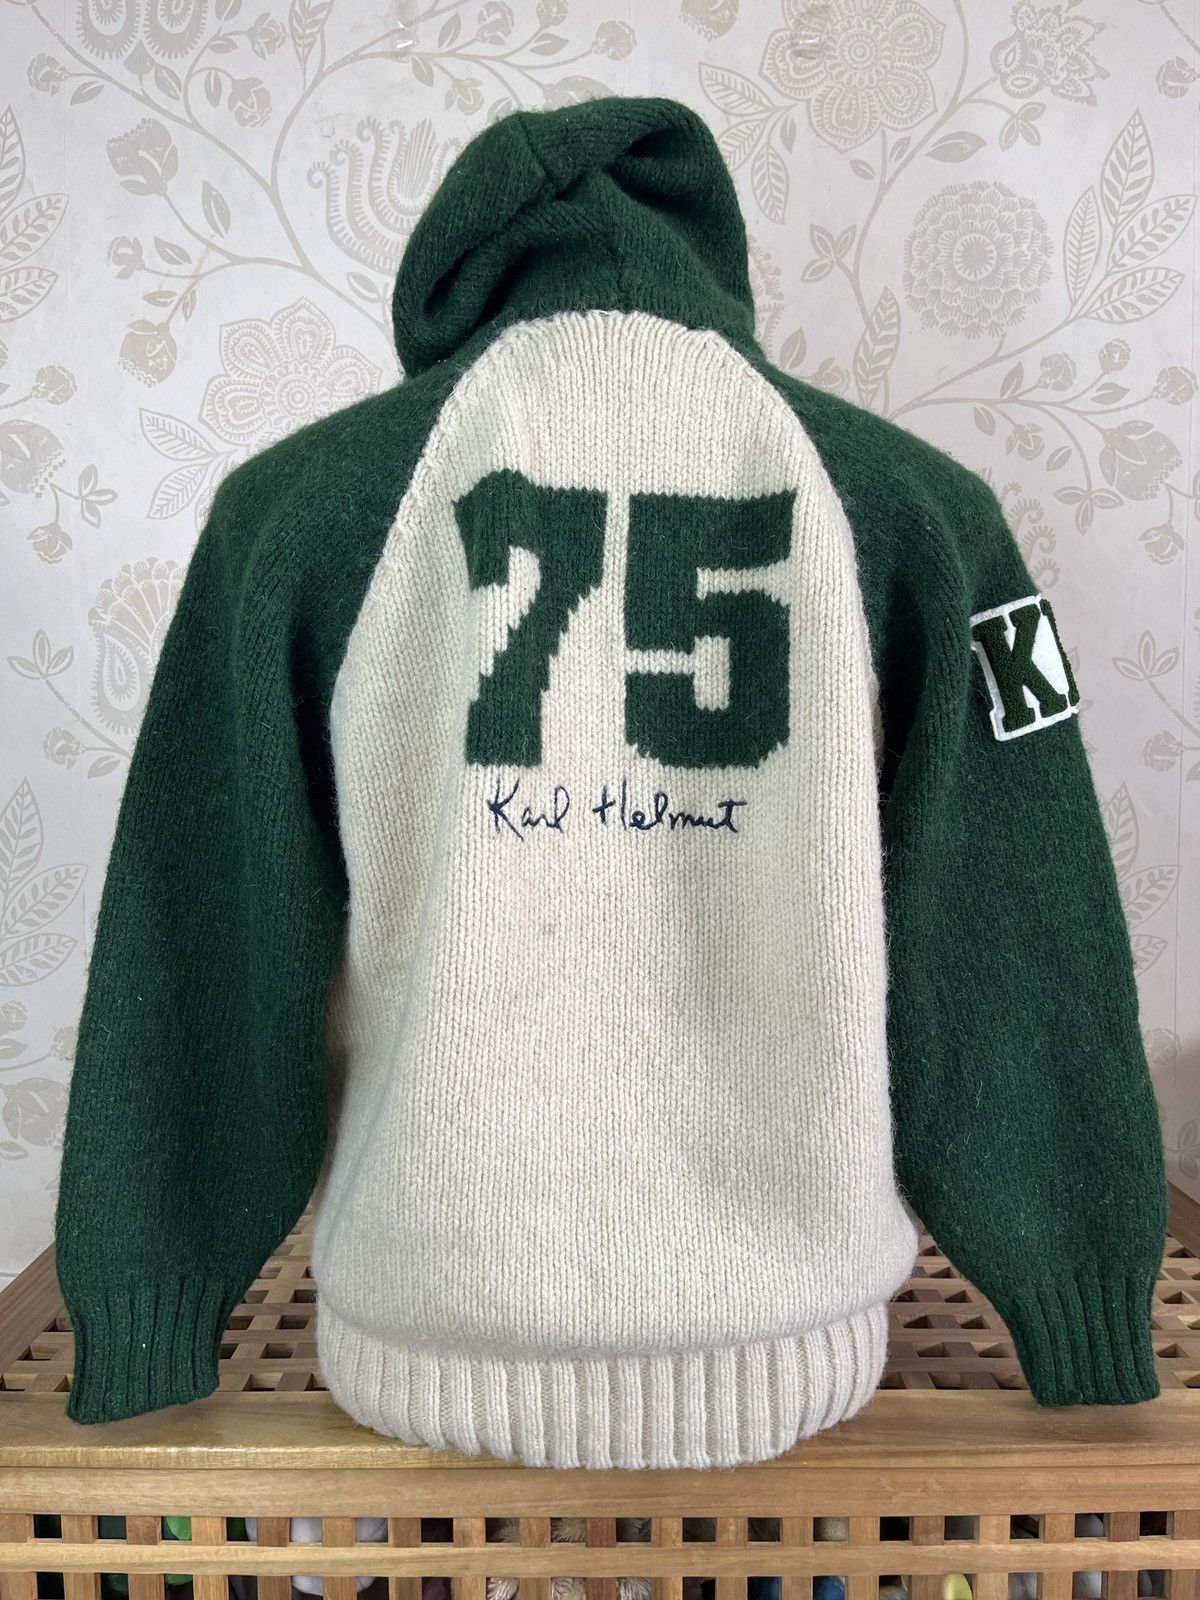 Grails Karl Helmut MLB Sweater Knitwear Vintage 1980s - 1